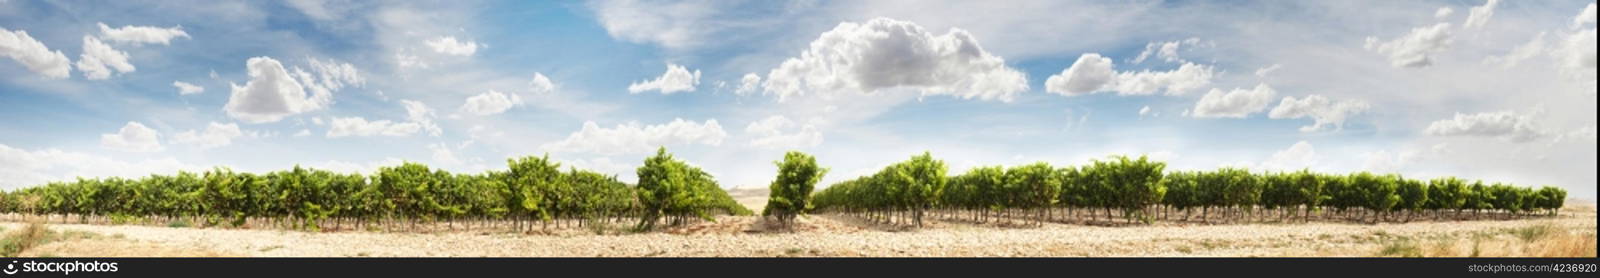 Vineyards panoramic image. Cloudy sunny sky